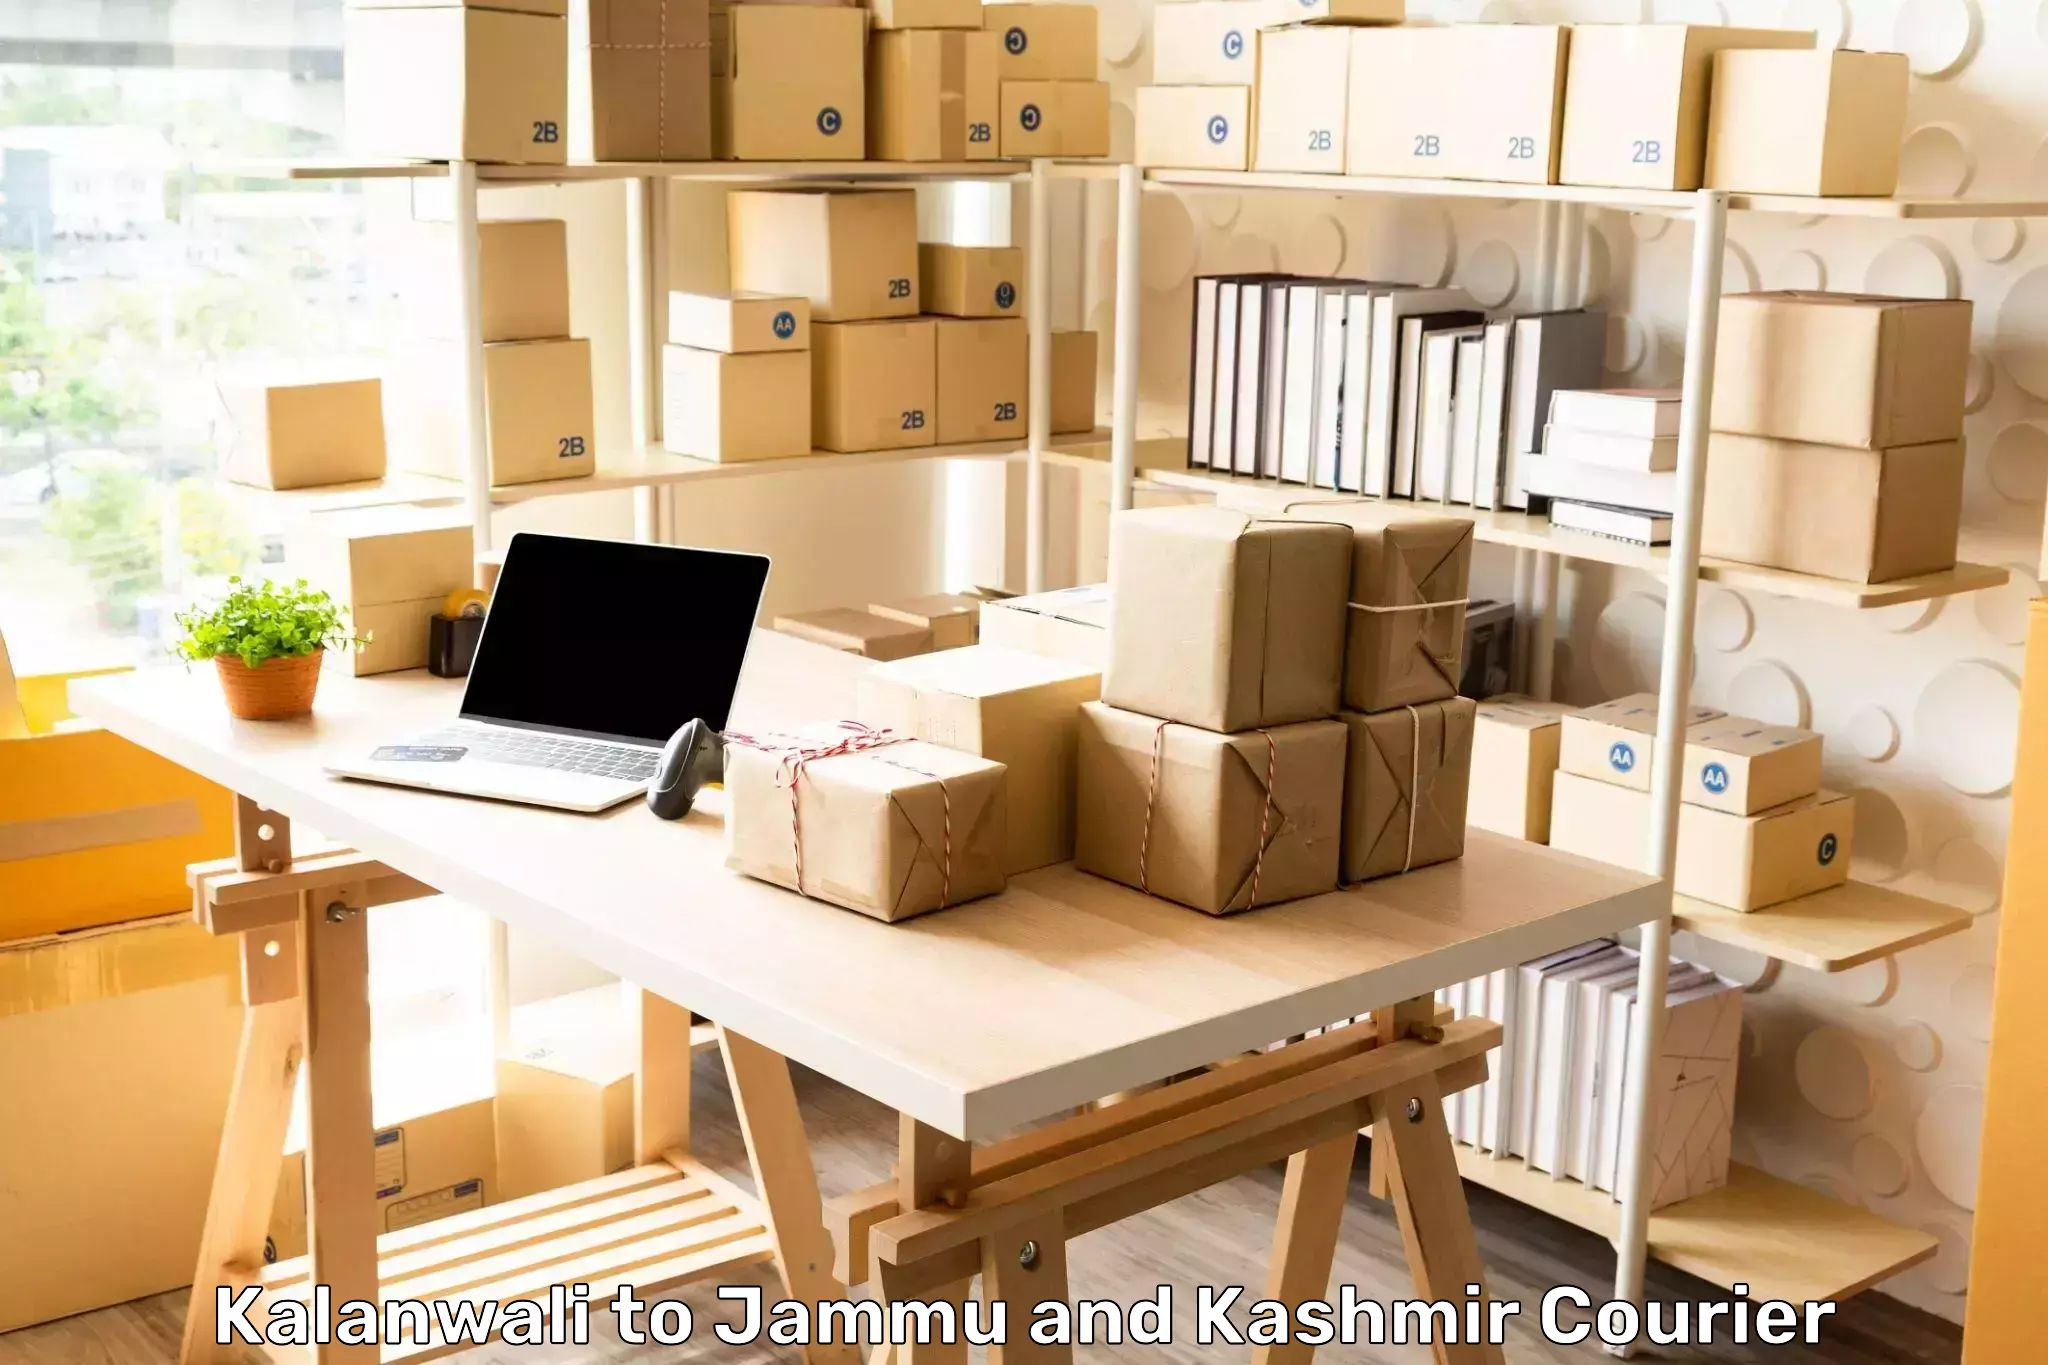 Efficient cargo handling Kalanwali to Jammu and Kashmir